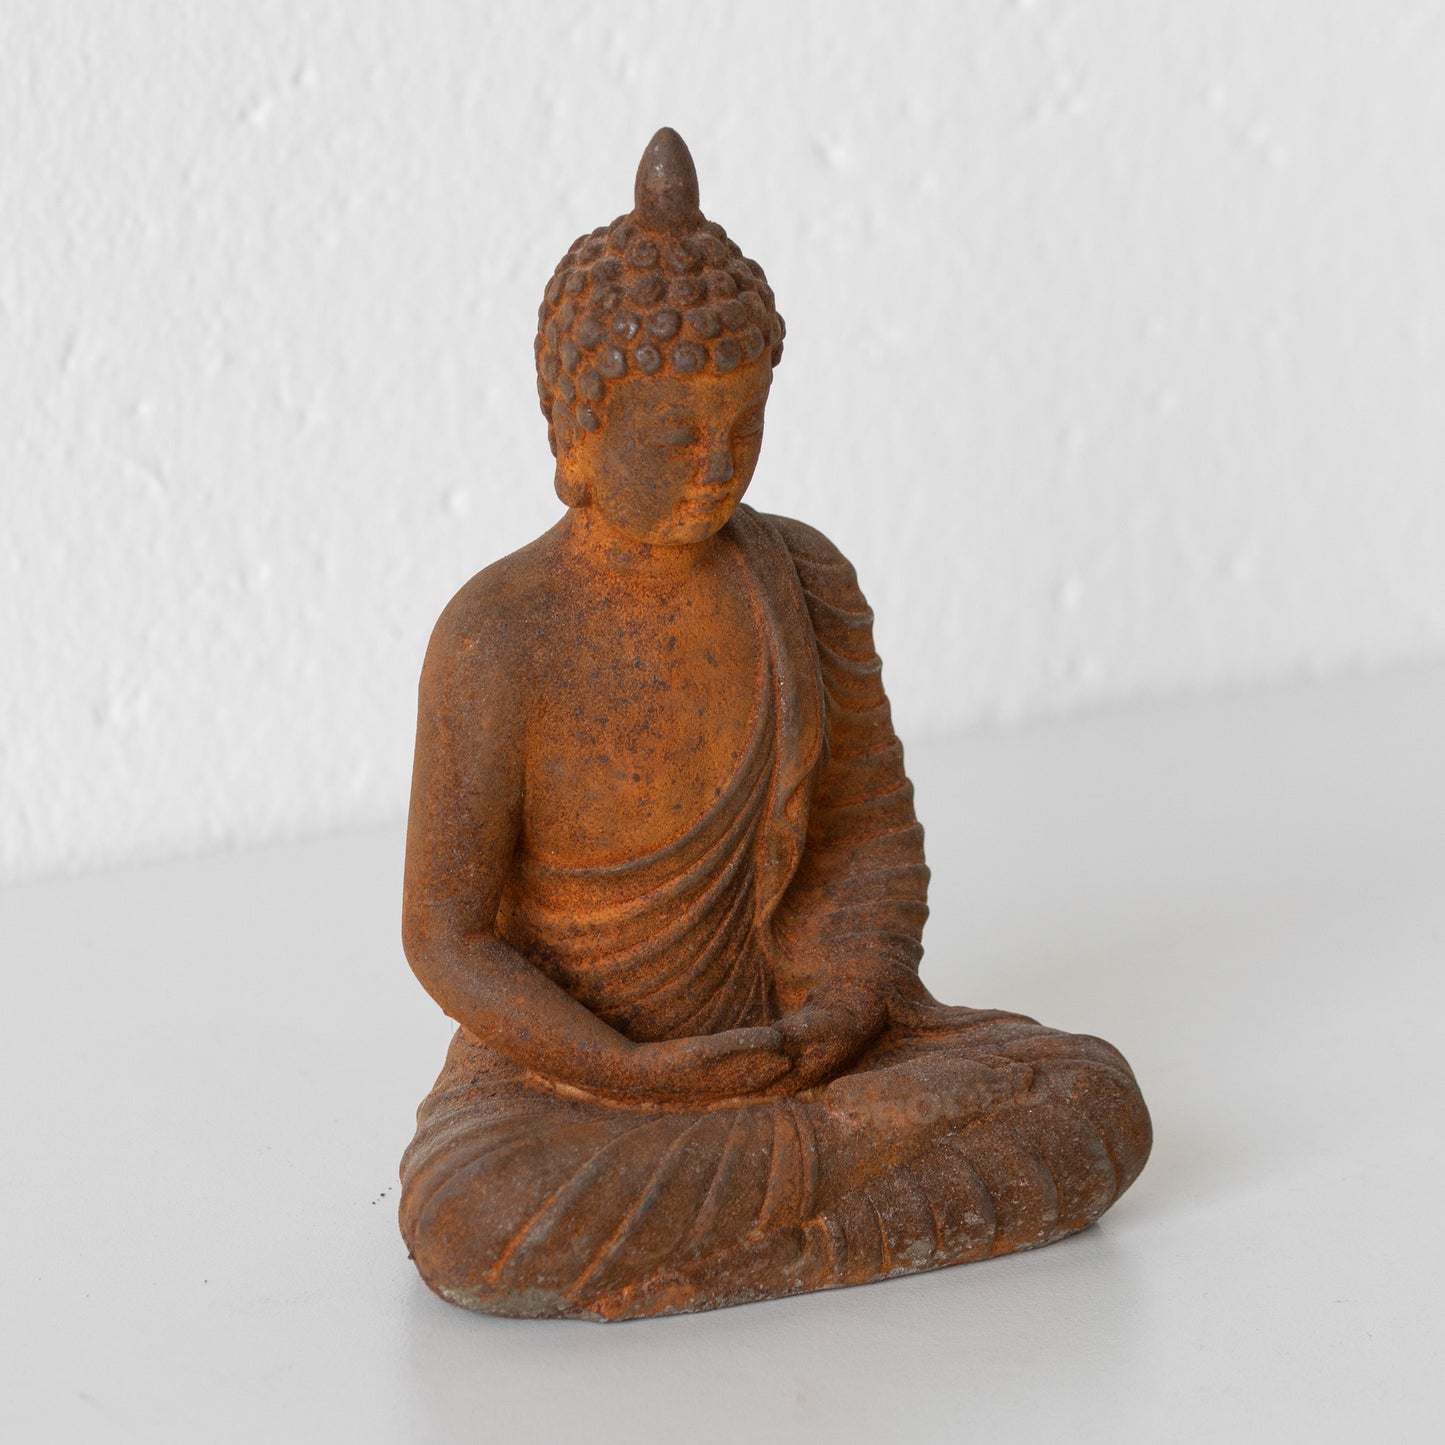 Small Sitting Buddha Rusty Cast Iron Ornament